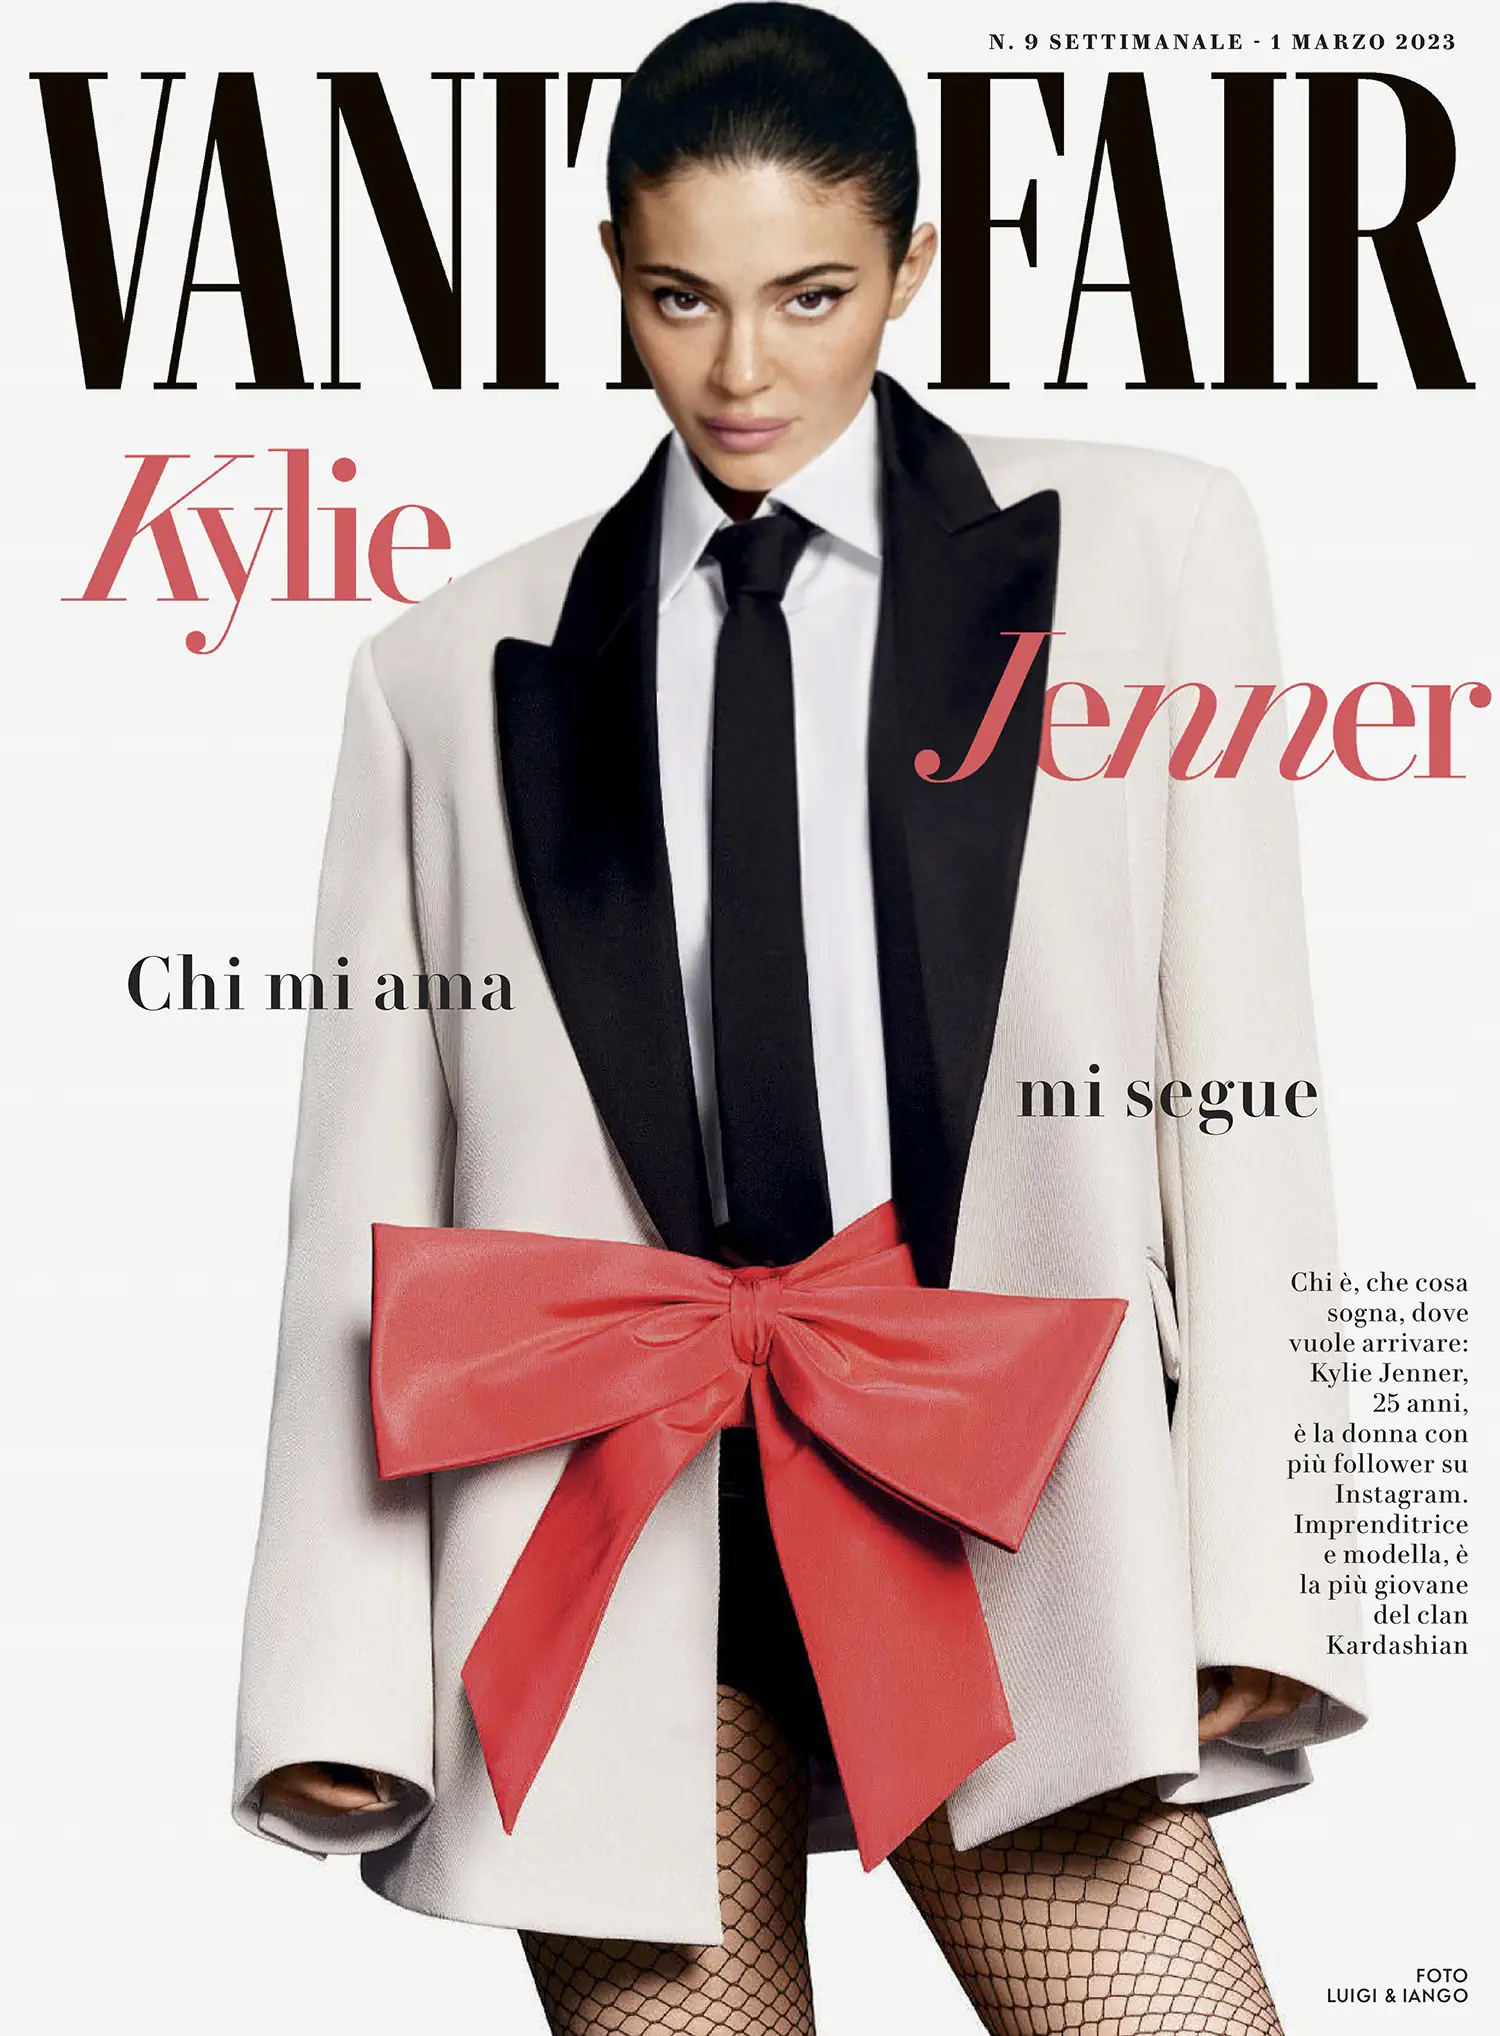 Kylie Jenner covers Vanity Fair Italia February 22nd, 2023 by Luigi & Iango